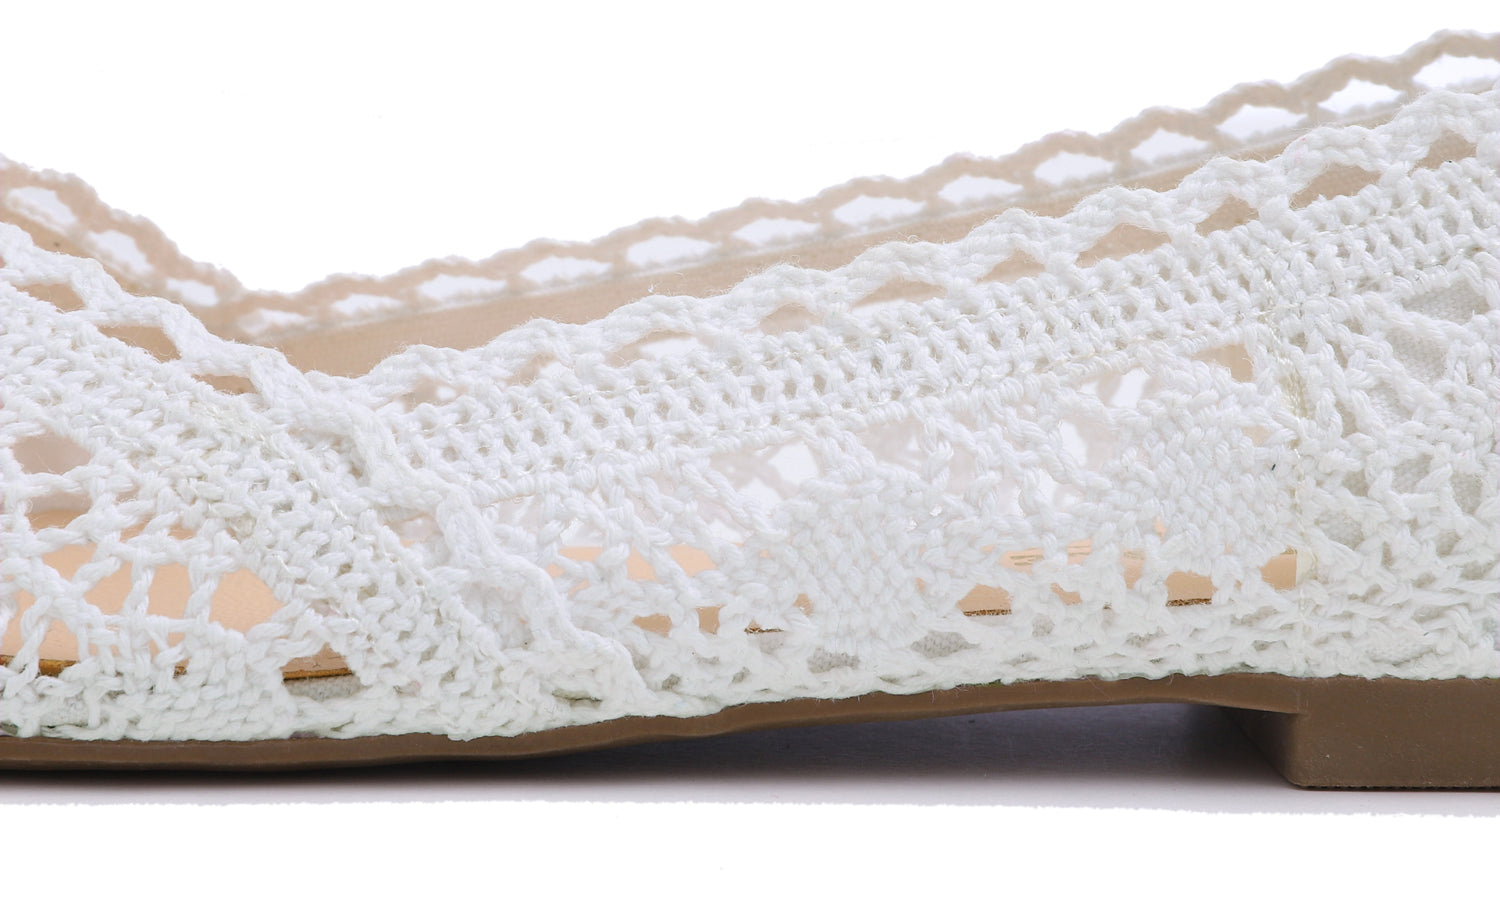 Feversole Round Toe Lace Ballet Crochet Flats Women's Comfy Breathable Shoes White Knit Crochet